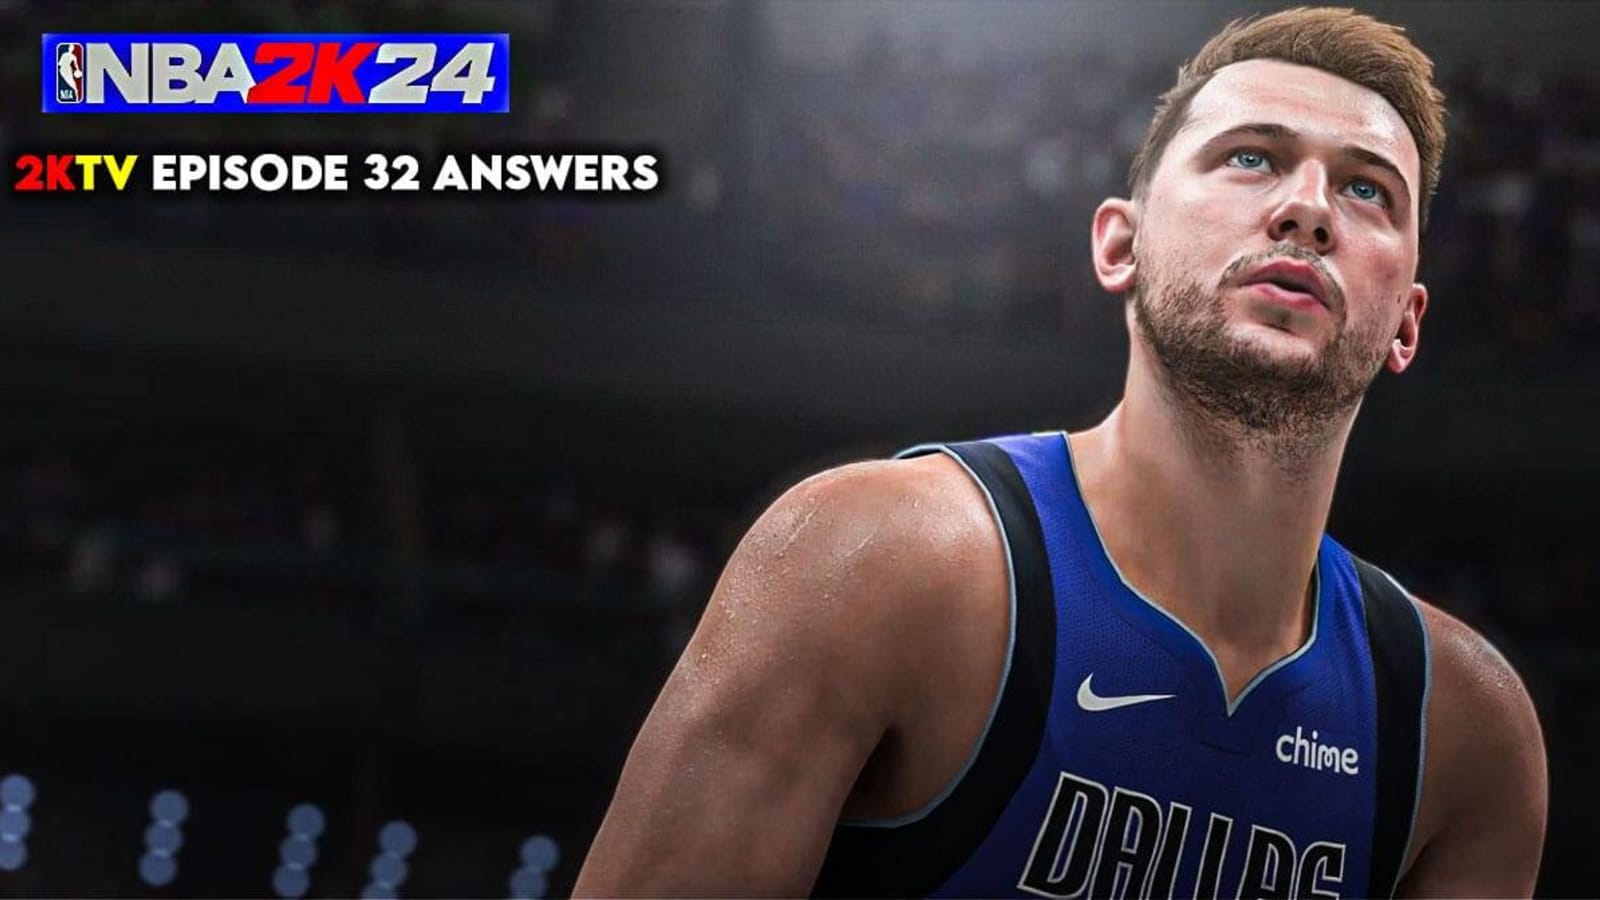 NBA 2K24 2KTV Episode 32 Answers